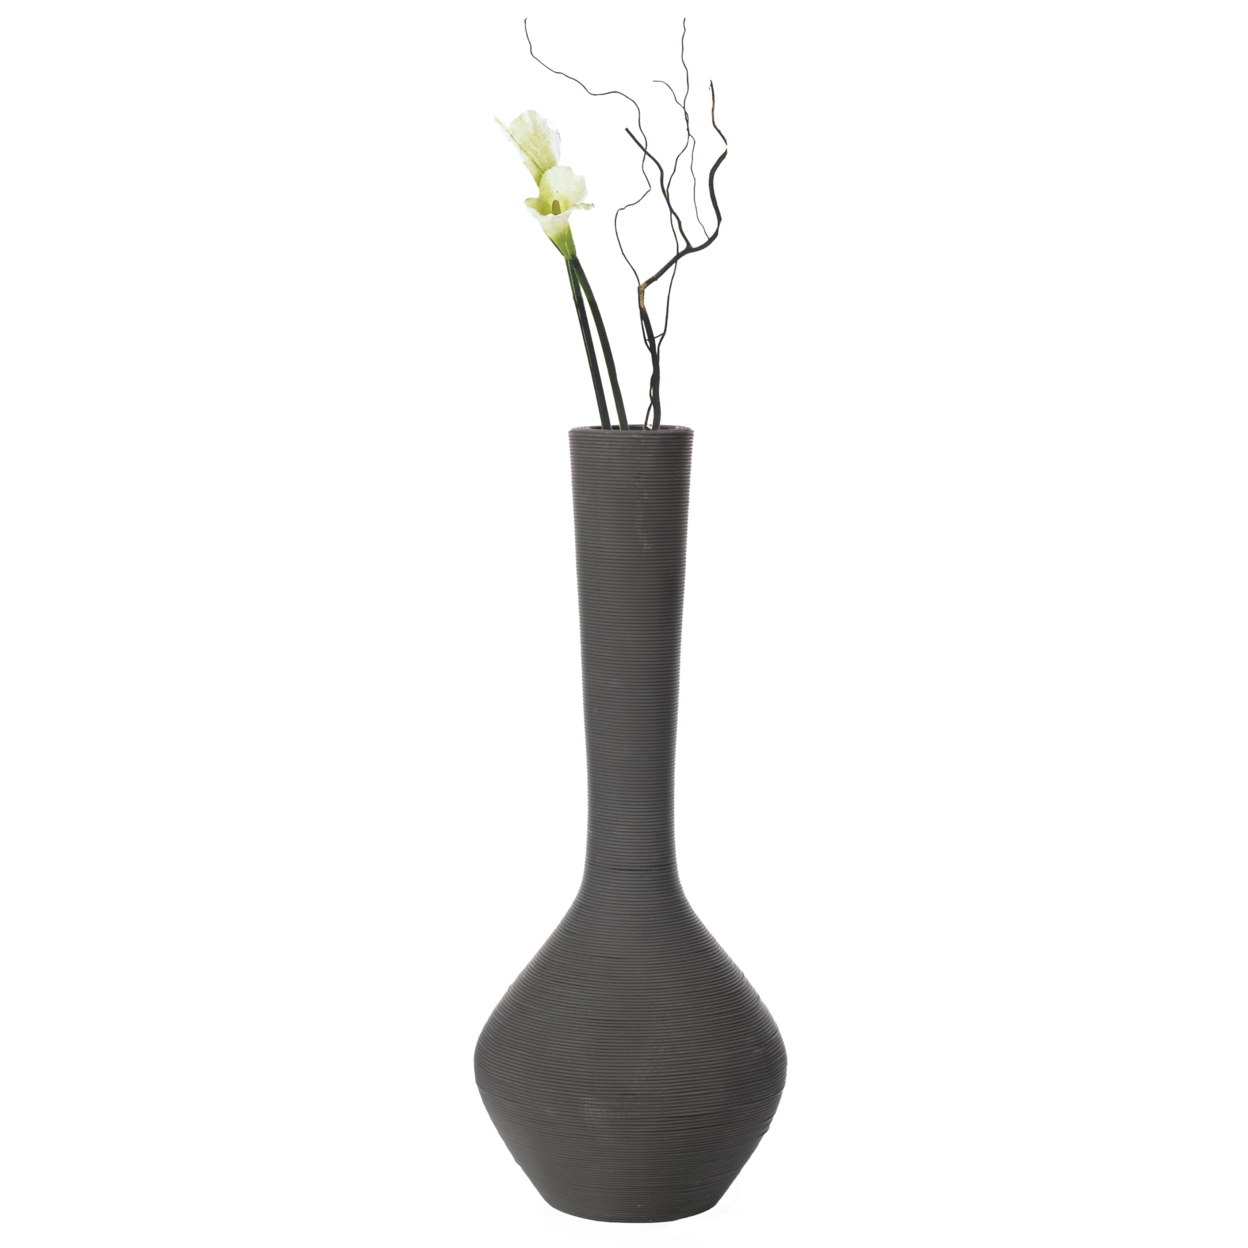 Tall Floor Vase, Modern Charcoal Grey Extra Large Floor Vase, 38-inch Trumpet Style Plastic Rope Vase, Decorative Lightweight Vase